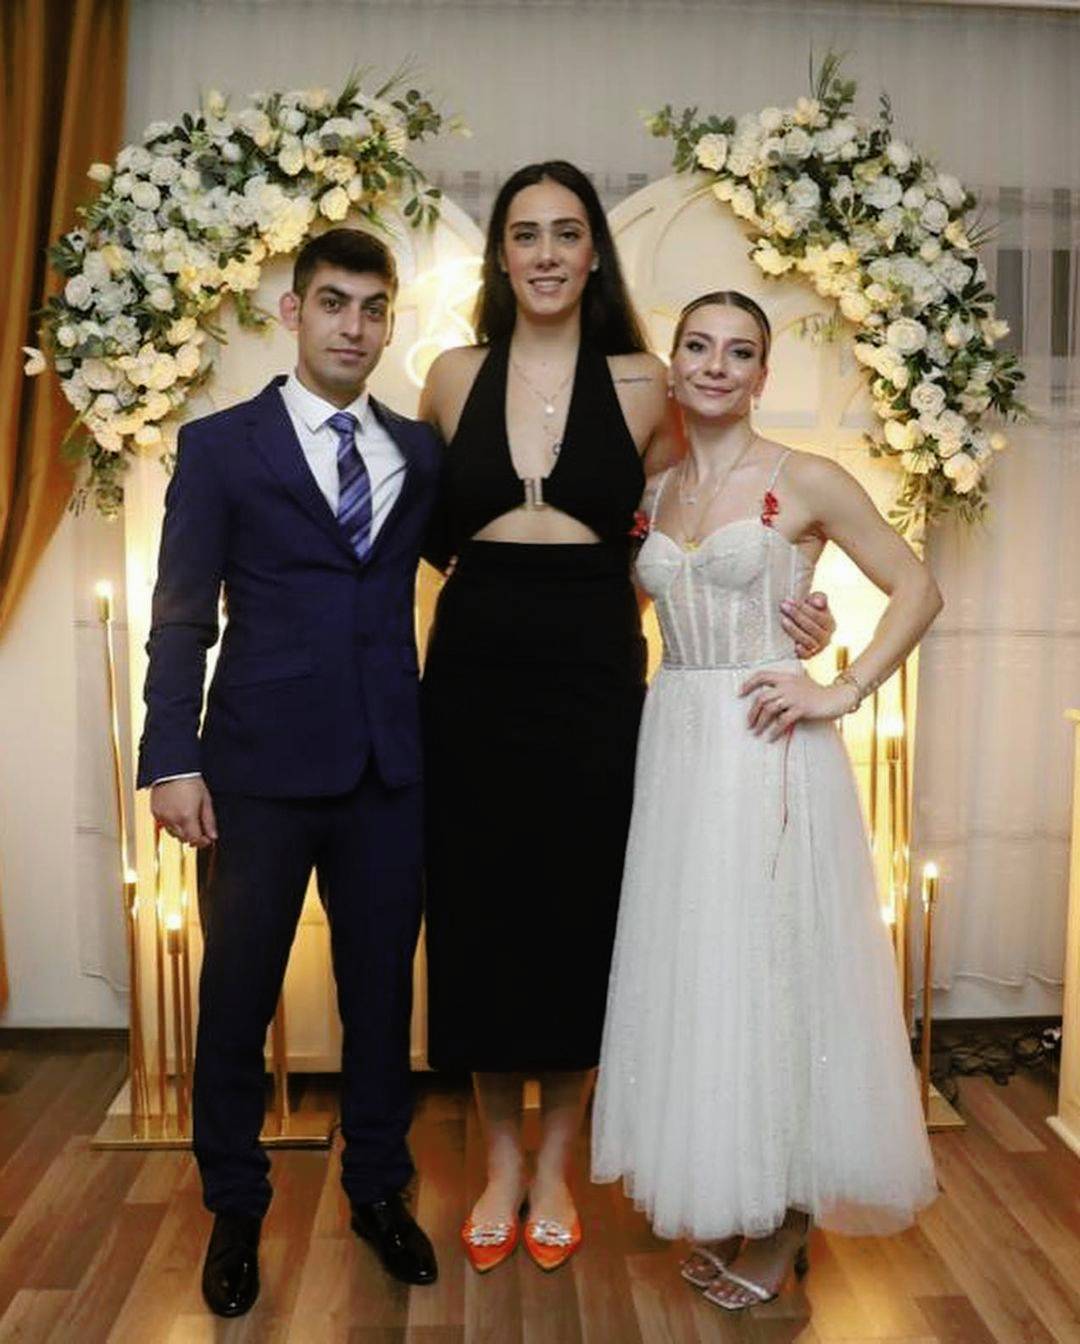 taller than bride and groom | Scrolller